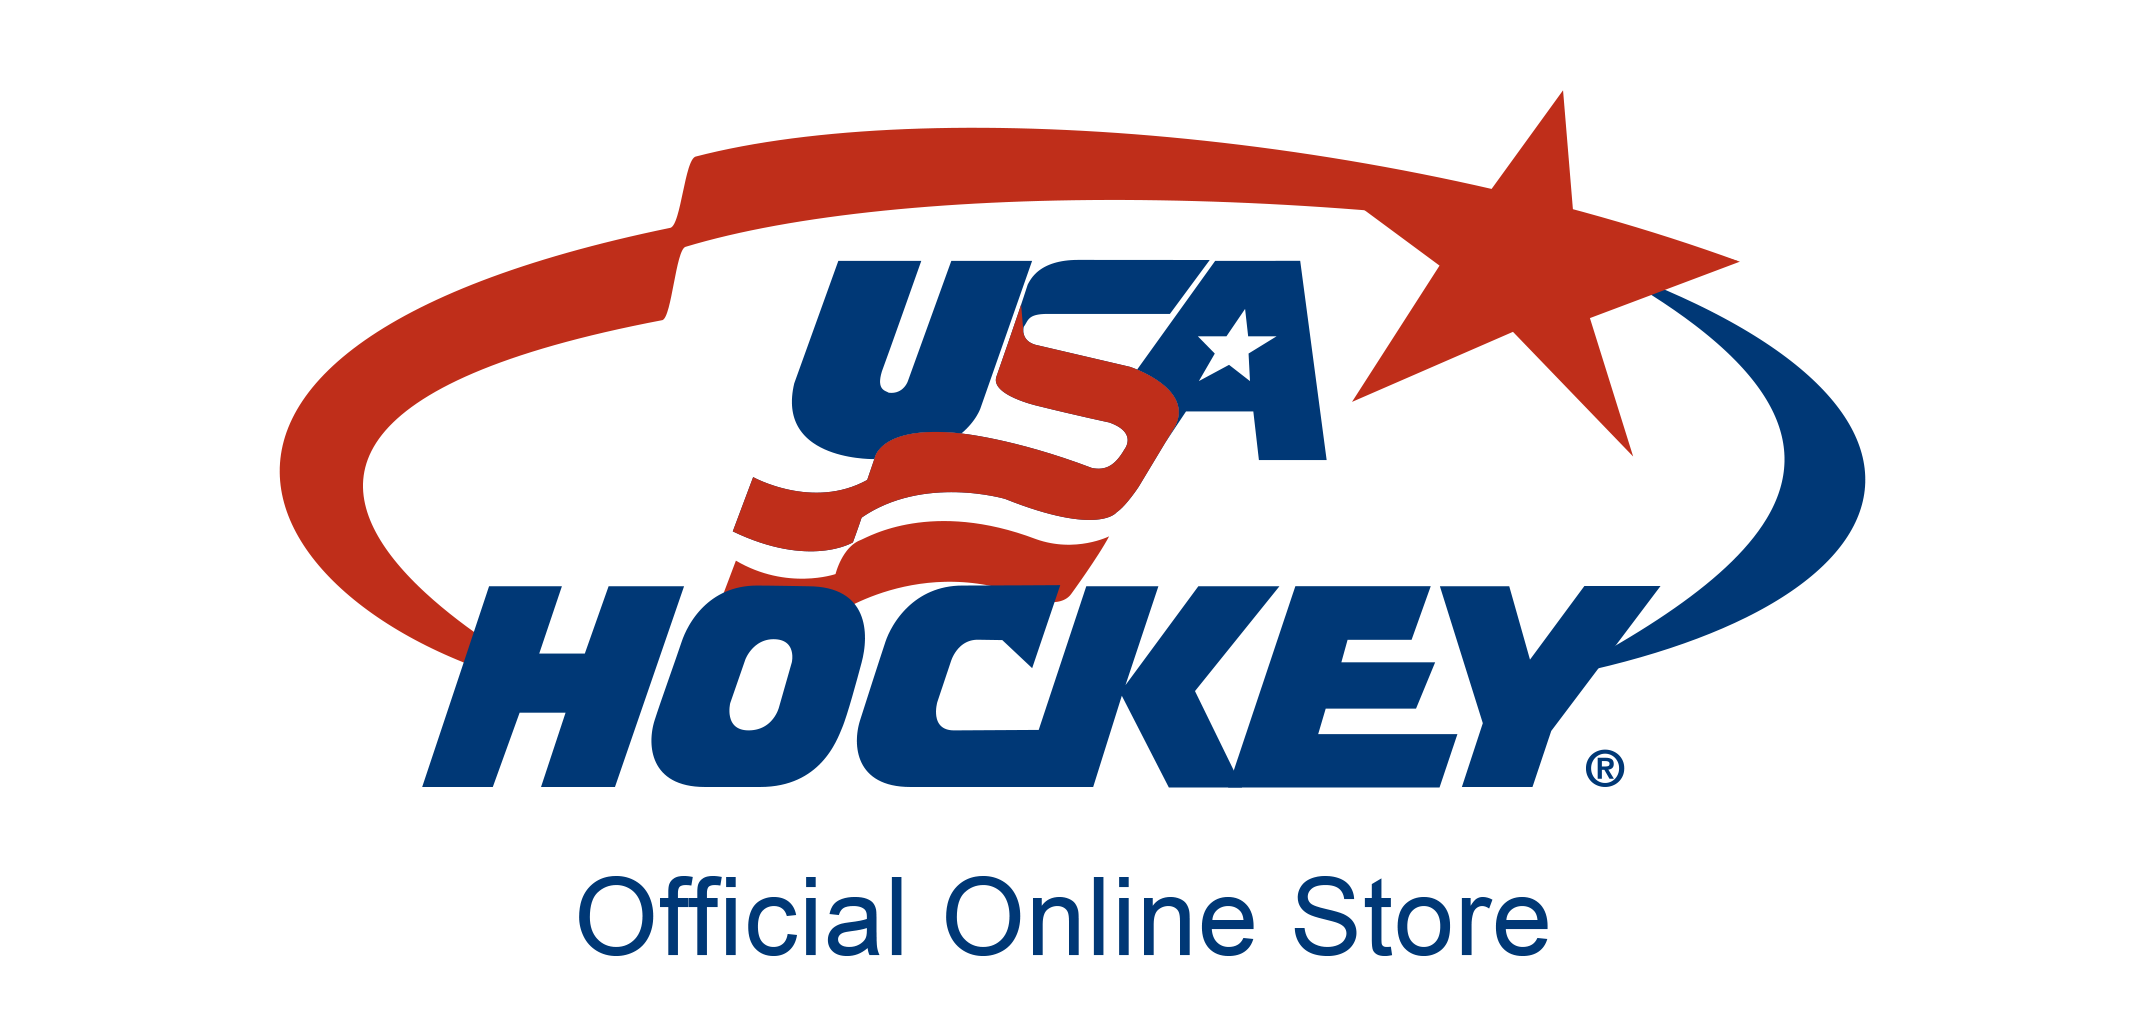 Nike USA Hockey Away 2022 Olympic Personalized Jersey